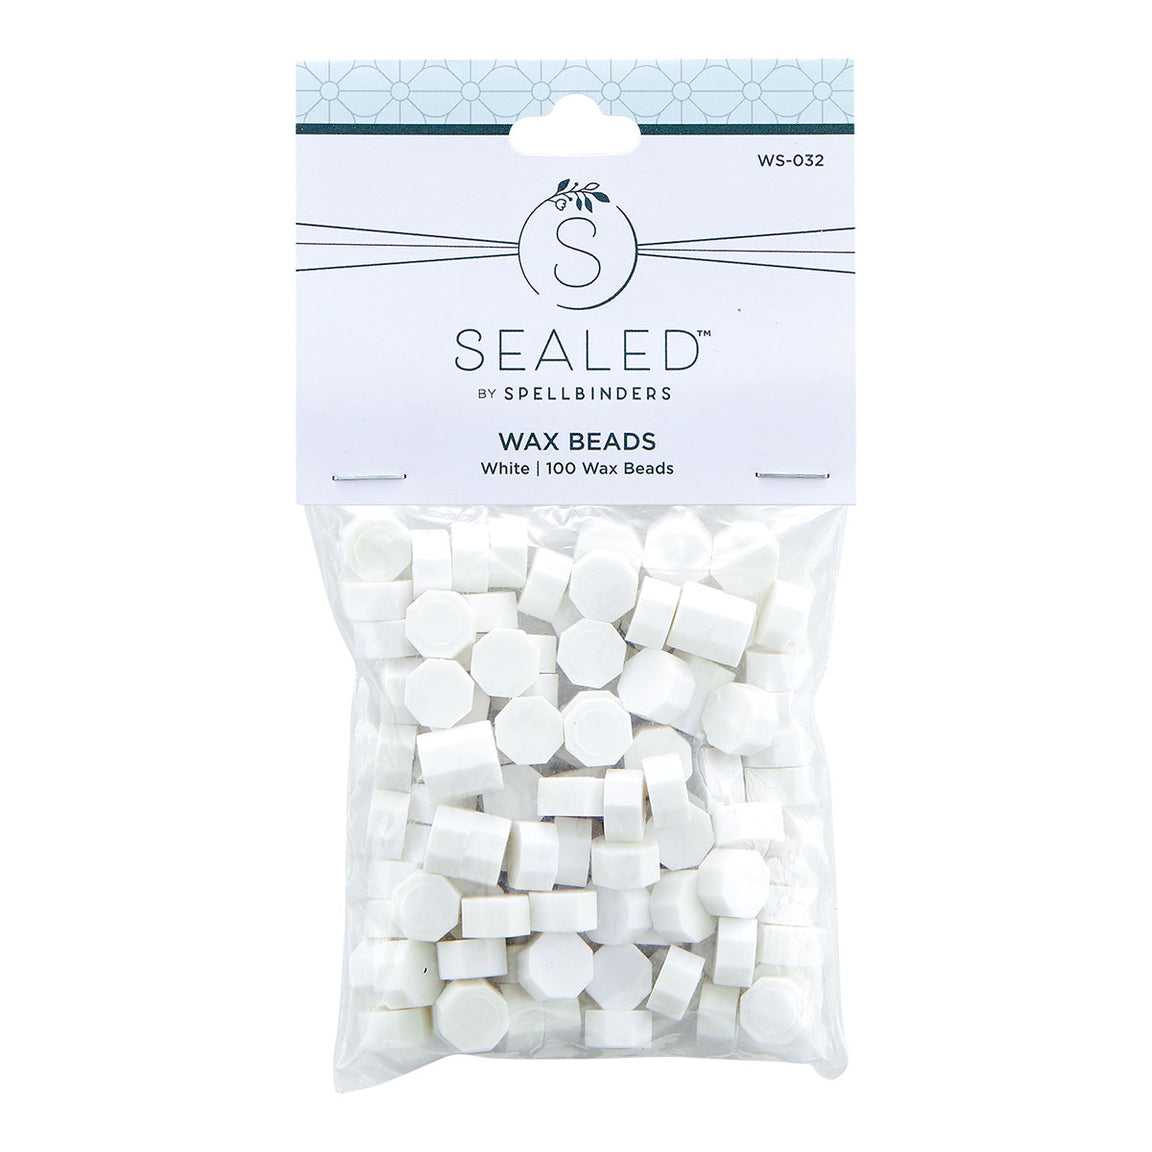 Spellbinders White Wax Beads - Sealed by Spellbinders Collection